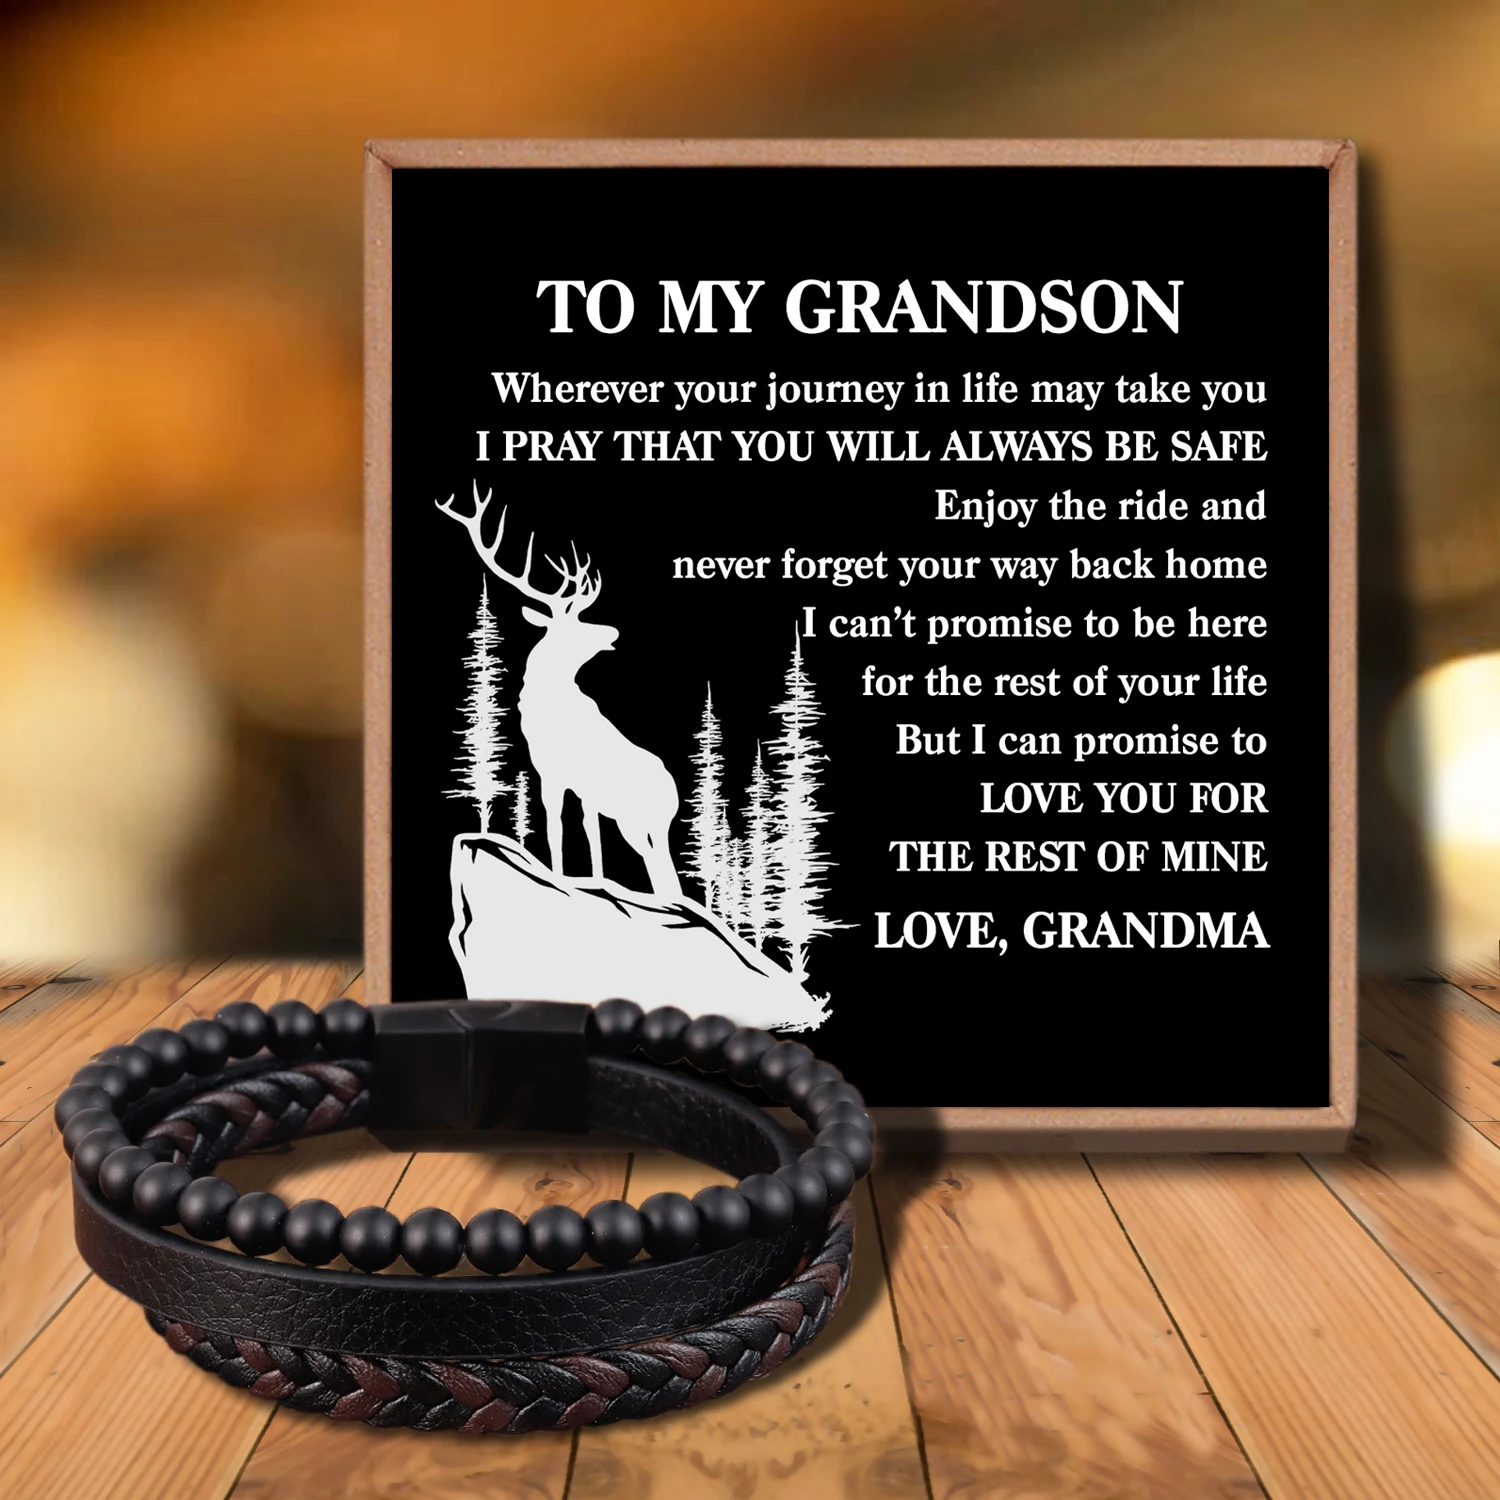 

Sab3133 Grandma To May Grandson MingAo Fine Stainless Steel Jewelry Multi-Layered Men's Black Leather Beaded Bracelet High